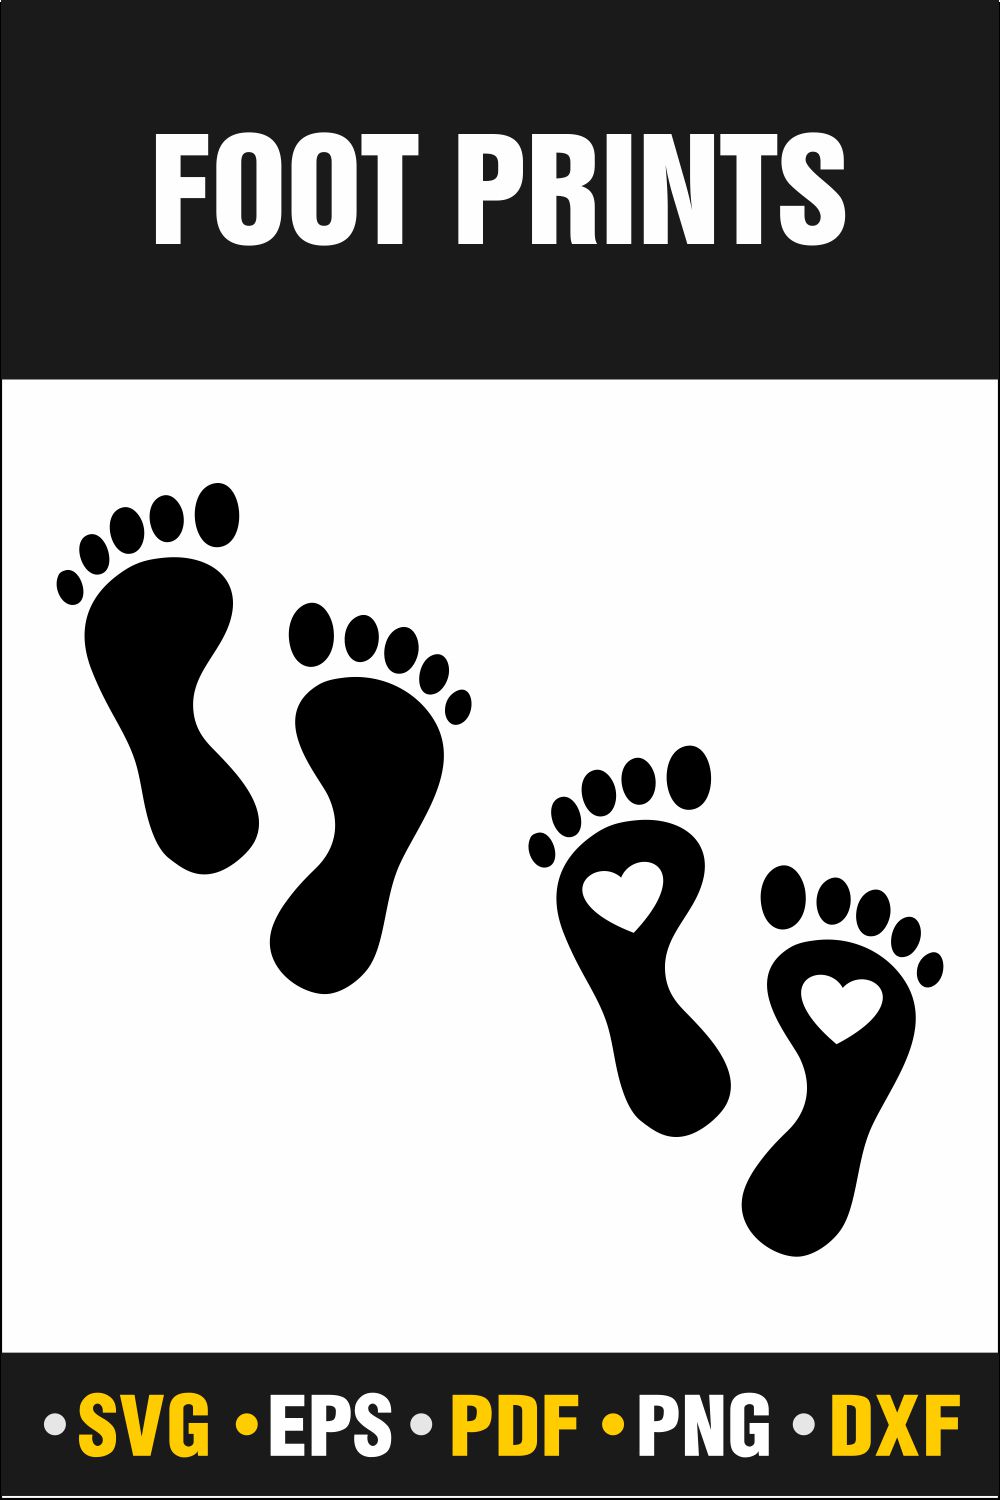 Footprint Svg, Footprint , Footprint Love Svg, Heart footprint Png, Star Footprint Png, Mother's day Svg, Footprint Svg, Instant Download Vector Cut file Cricut, Silhouette, Pdf Png, Dxf, Decal pinterest preview image.